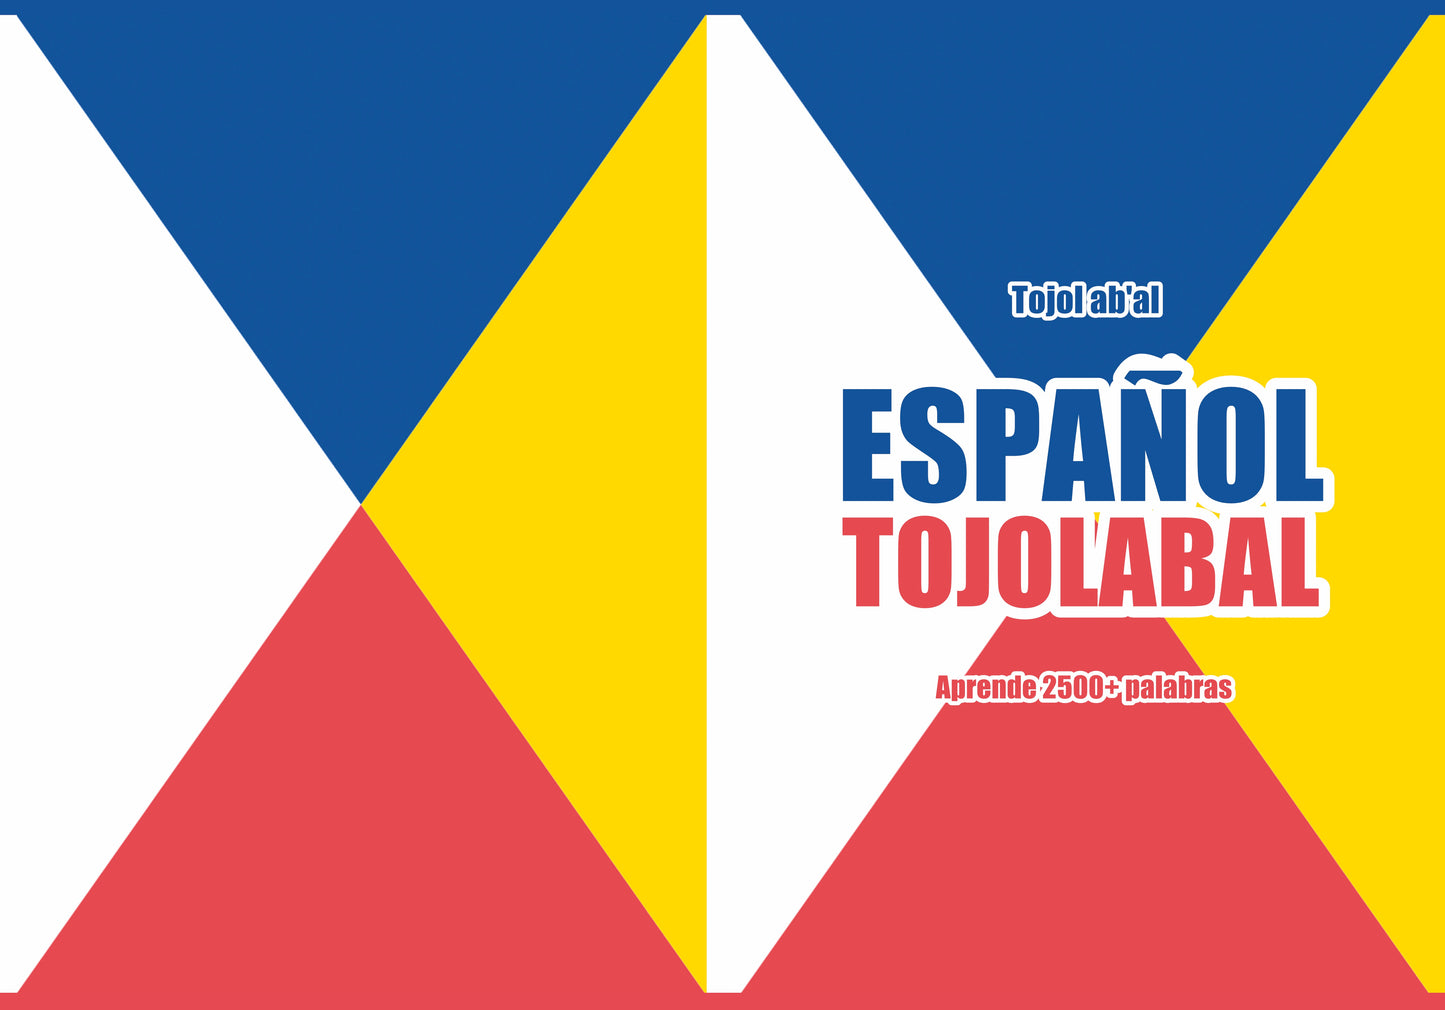 Español-tojolabal cuaderno de vocabulario